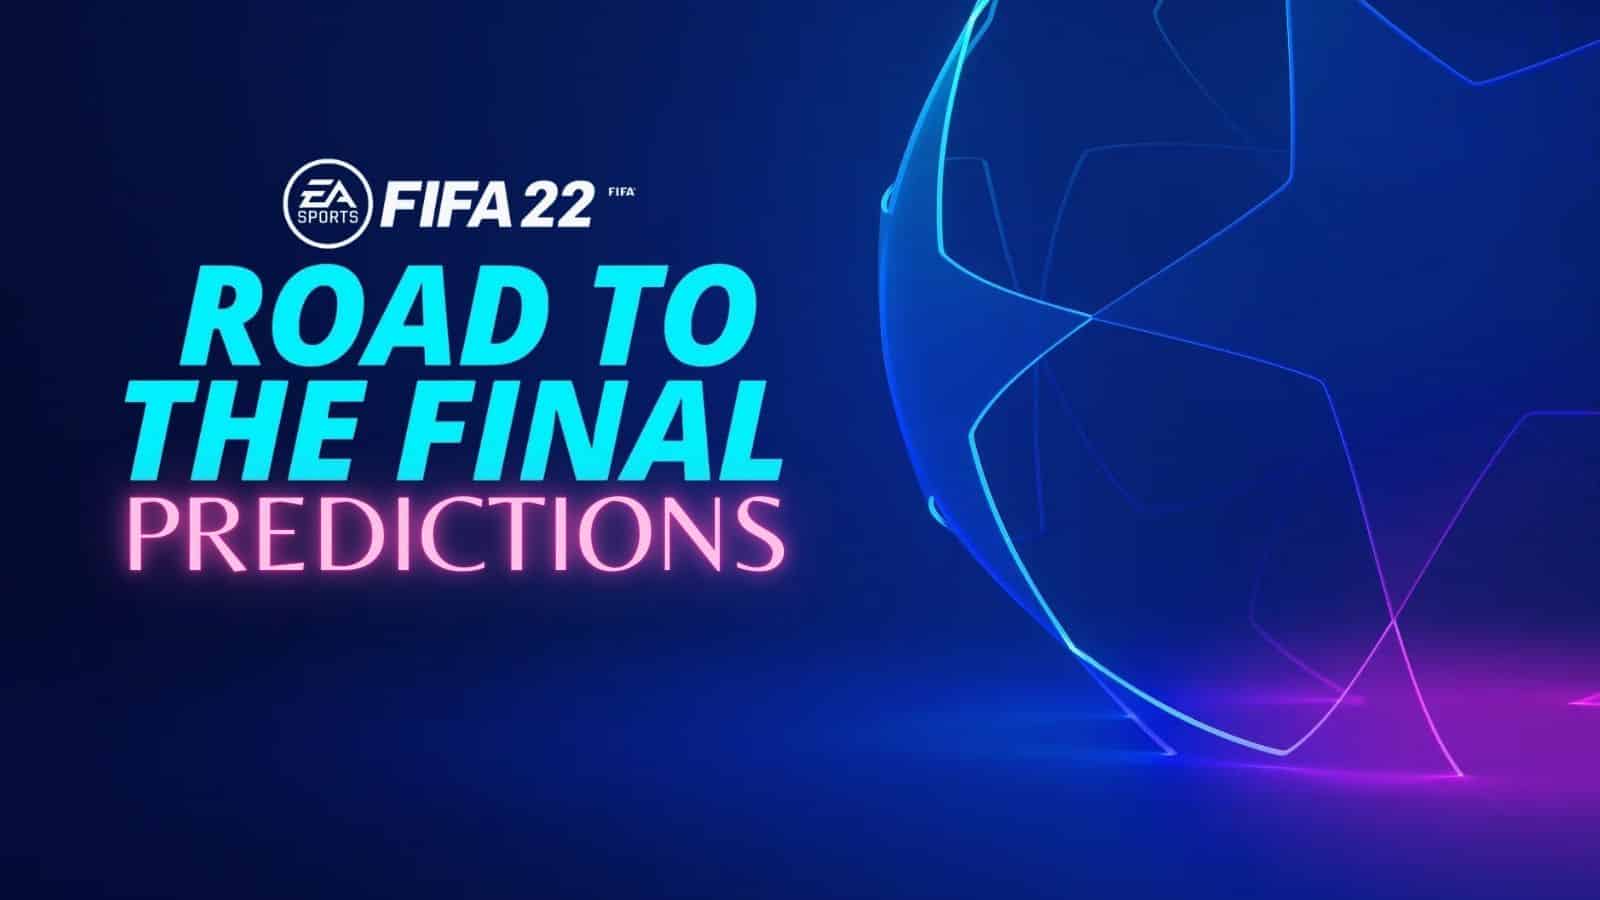 Final da CHAMPIONS LEAGUE no FIFA 22! 